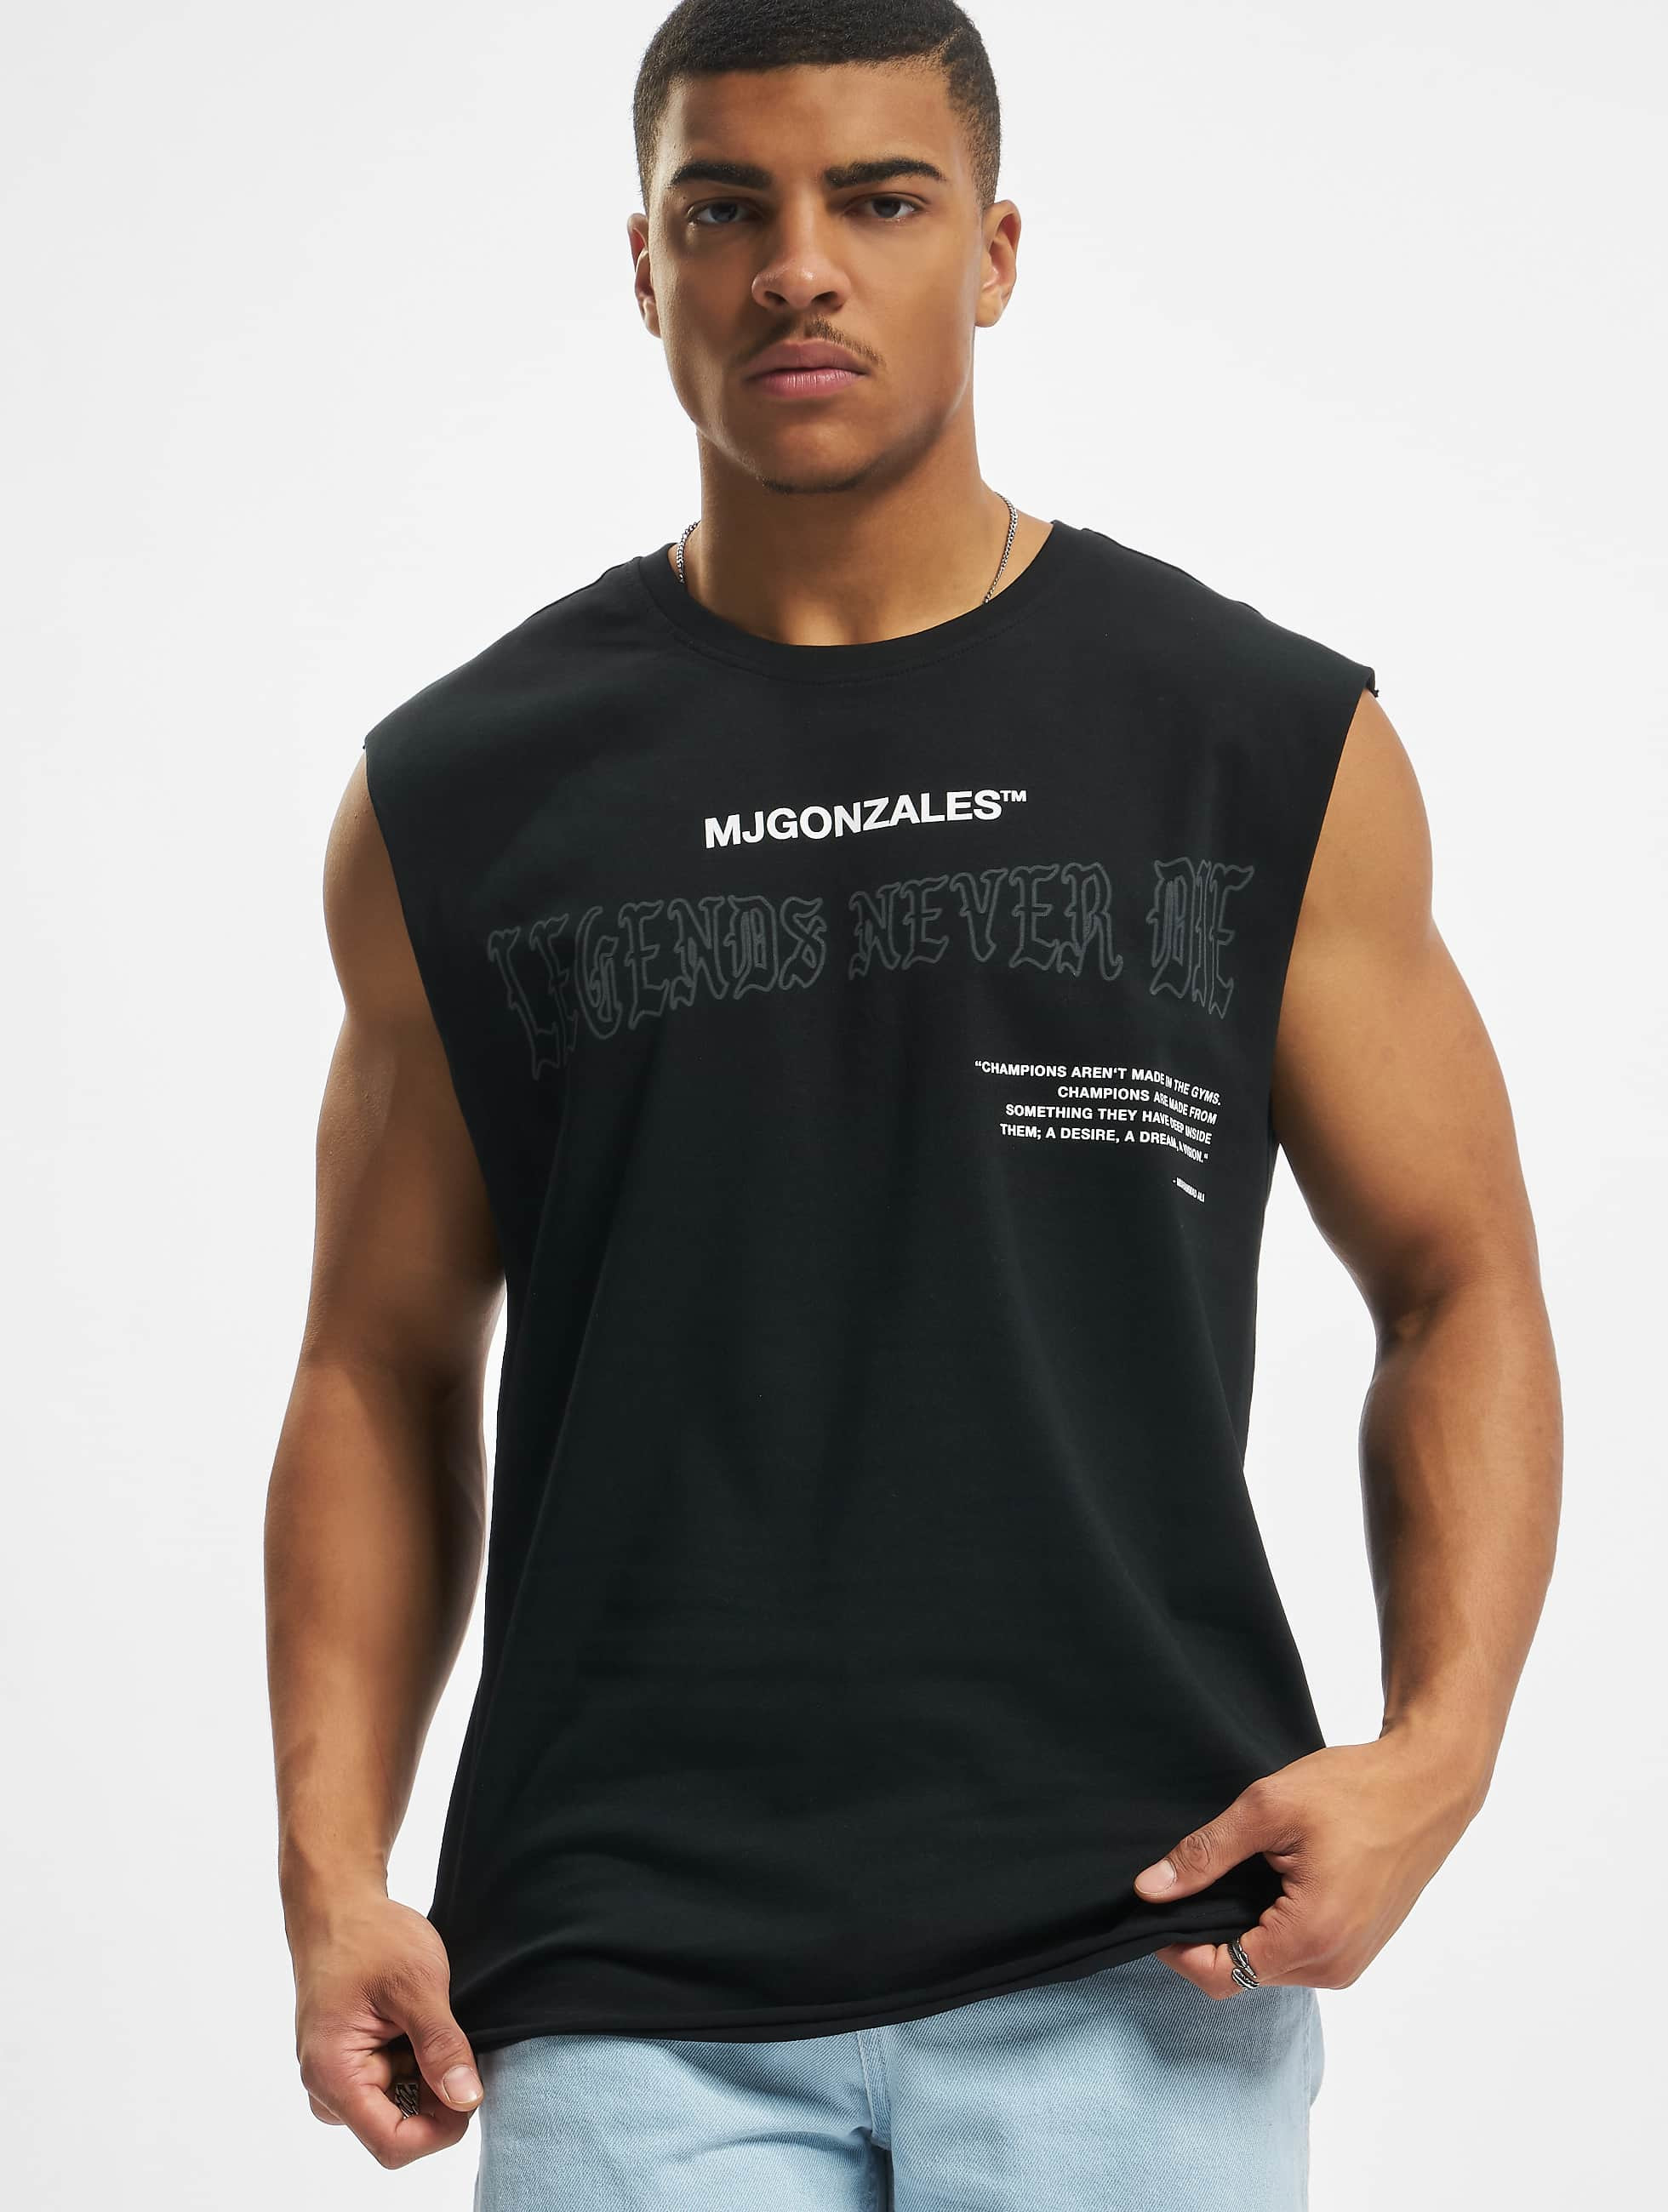 la seguridad Gemidos Goteo MJ Gonzales Ropa superiór / Camiseta Muhammad Ali - Legends Never Die  Sleeveless en negro 933411